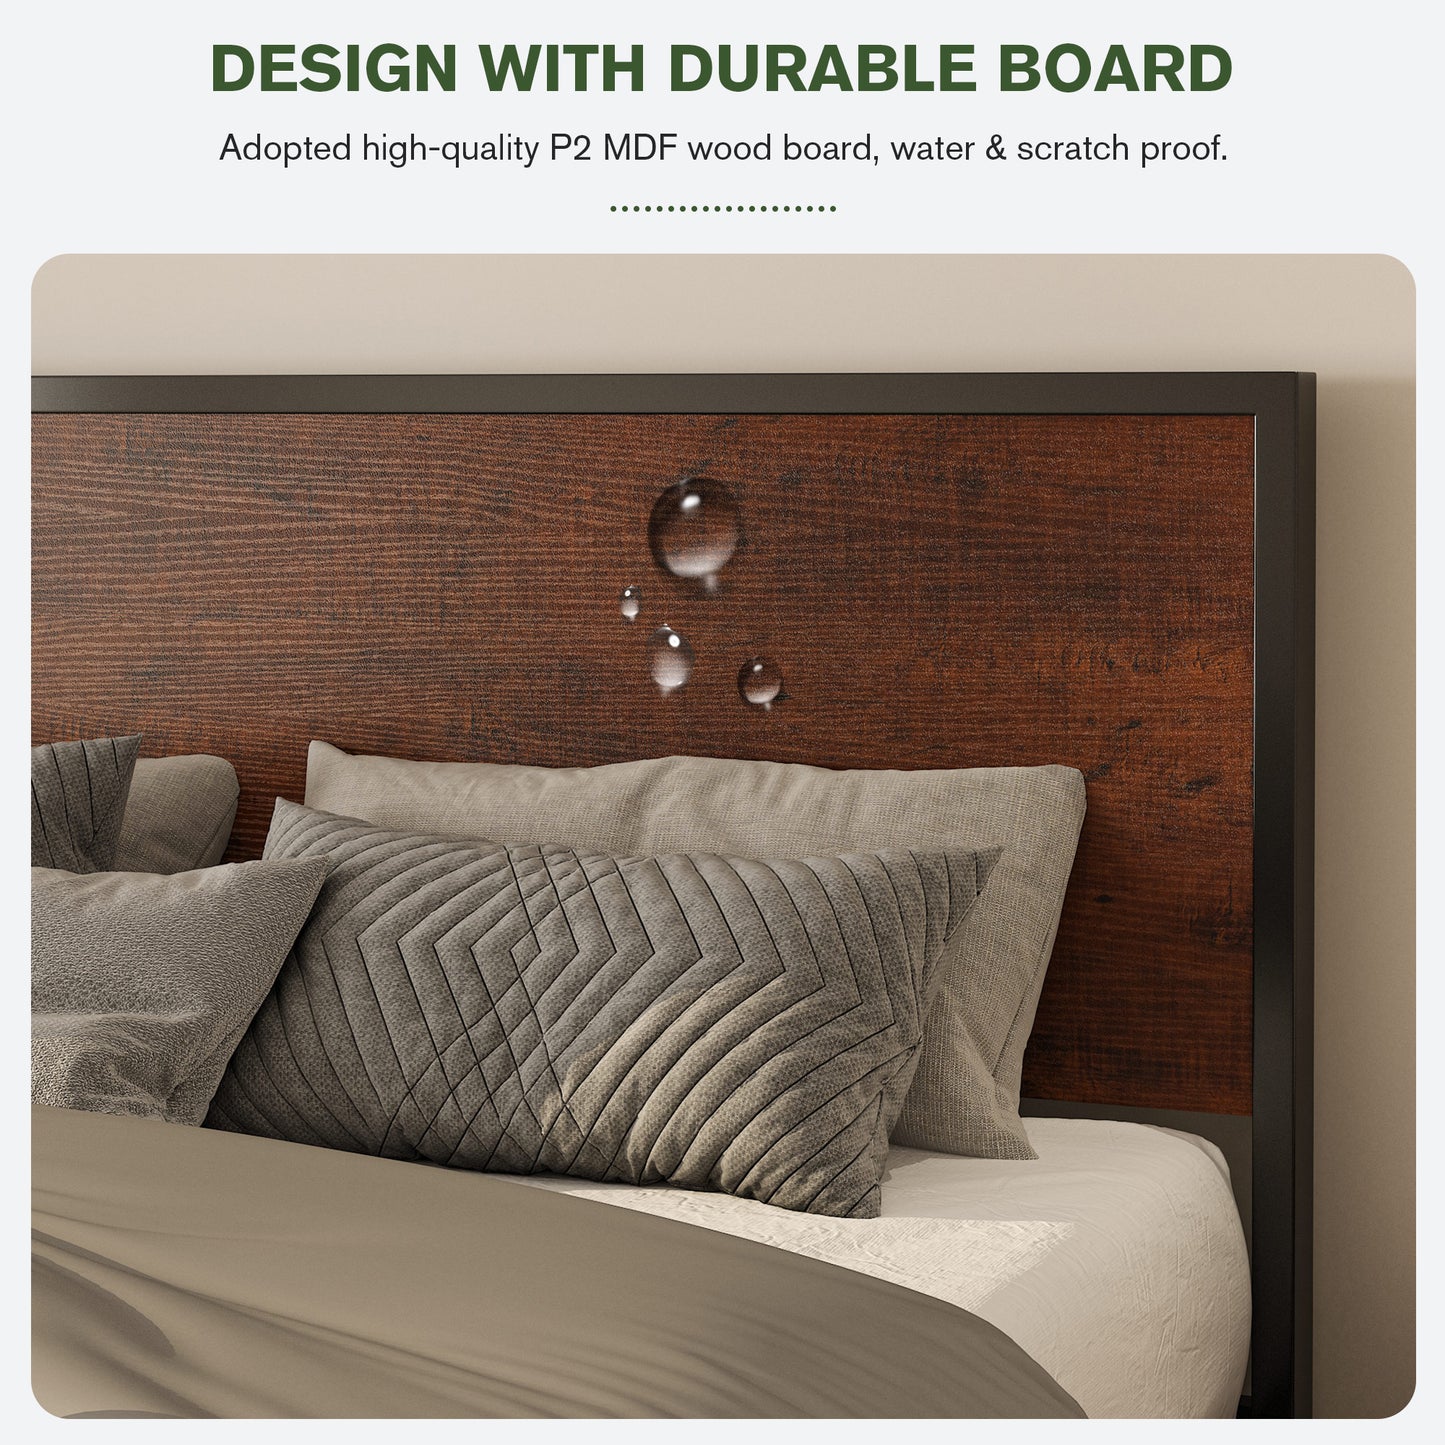 Allewie Heavy Duty Bed Frame with Sanders Headboard, Engineered Wood, 12'' Under Bed Storage